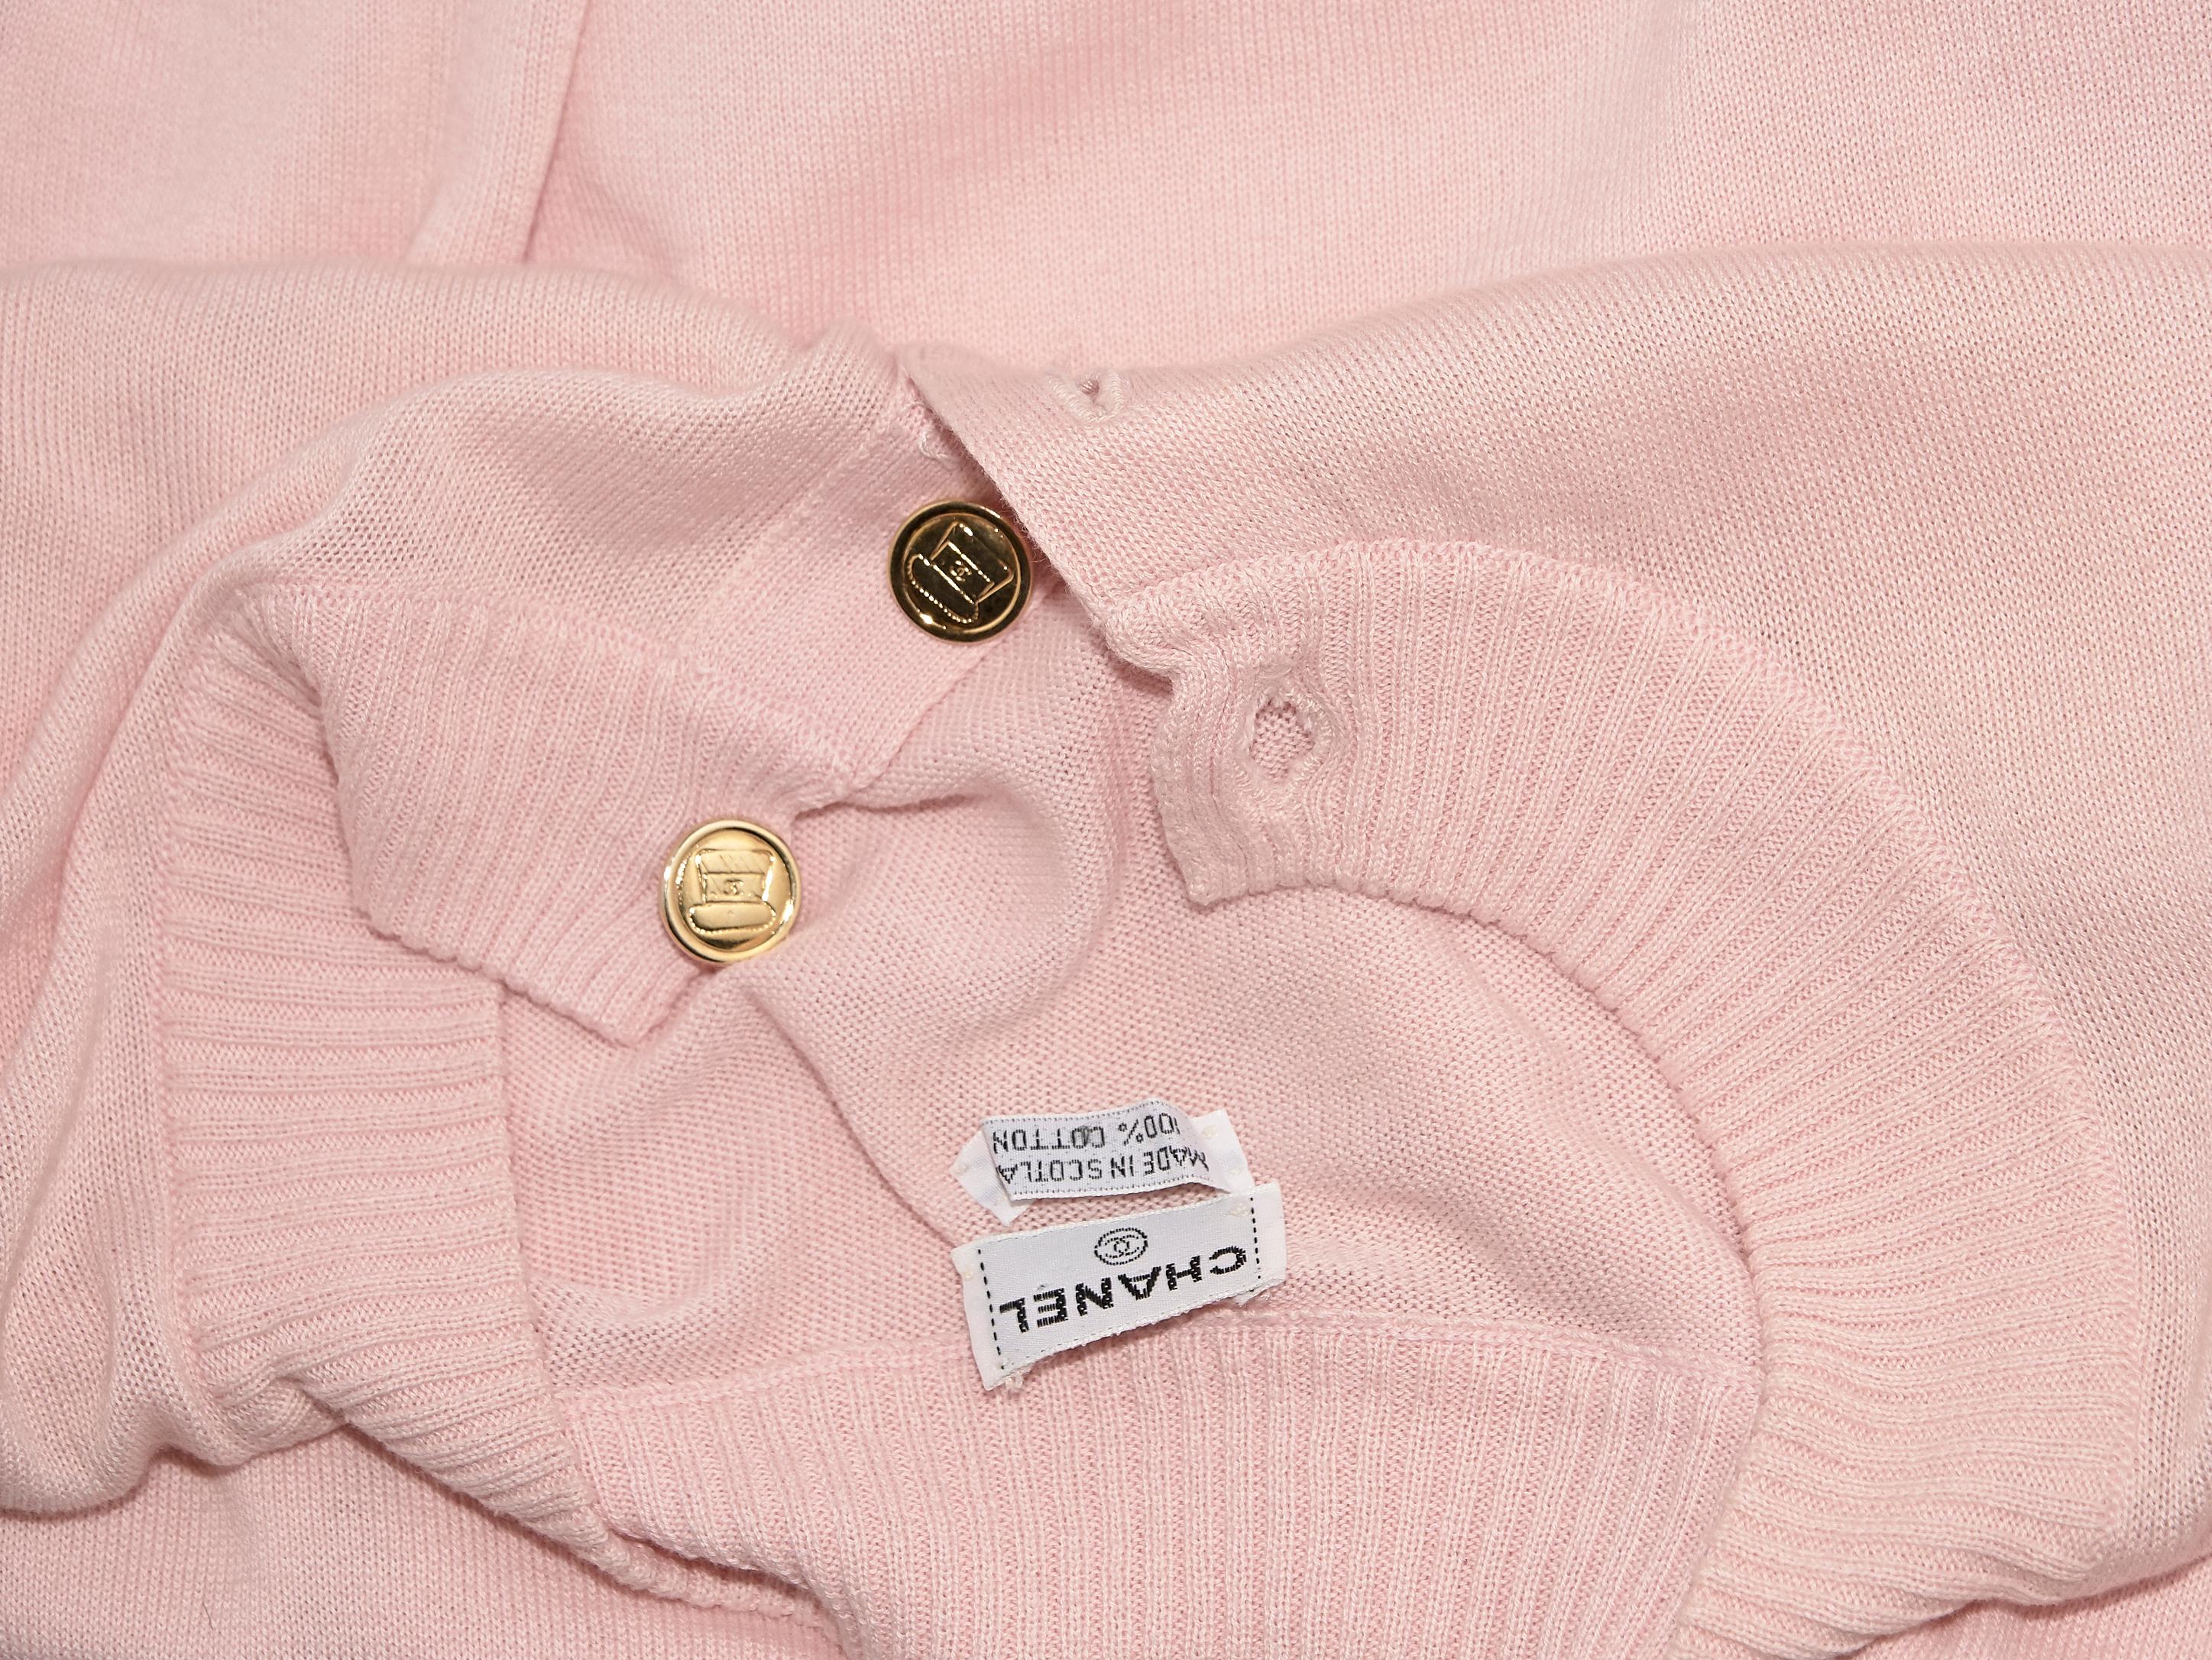 Beige Light Pink Vintage Chanel Sweater Top